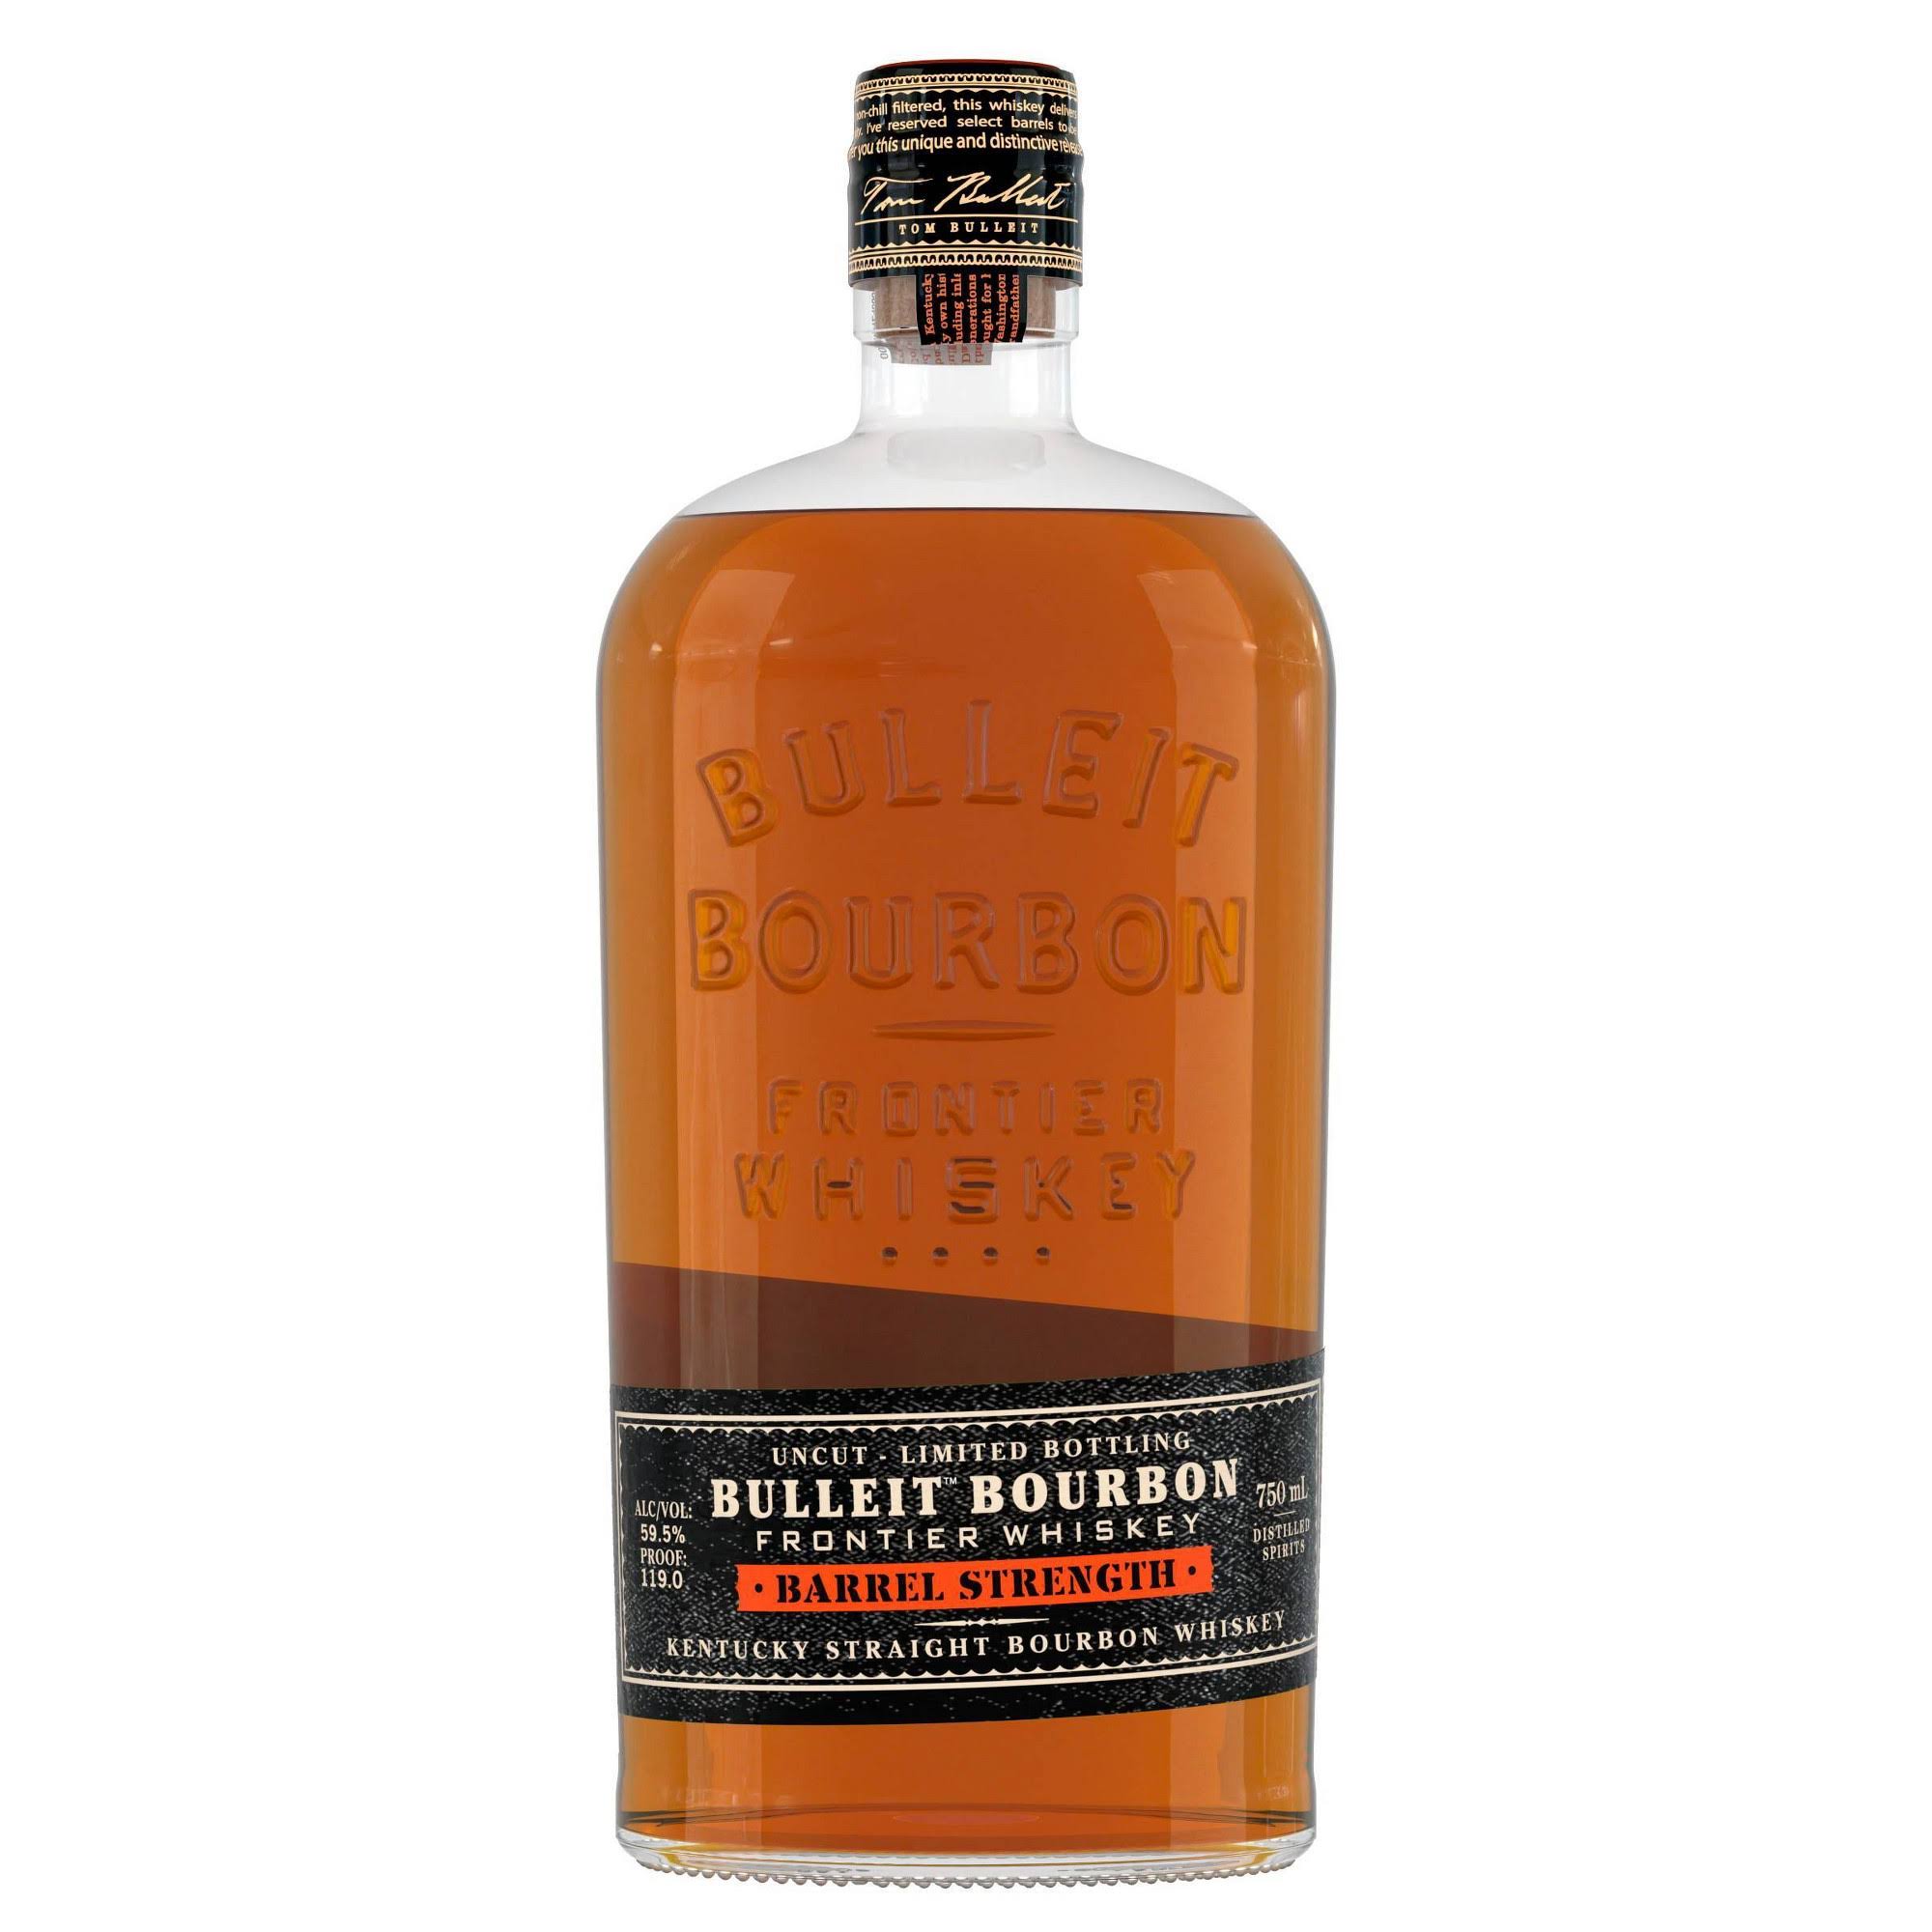 Bulleit Whiskey, Bulleit Bourbon Frontier - 750 ml